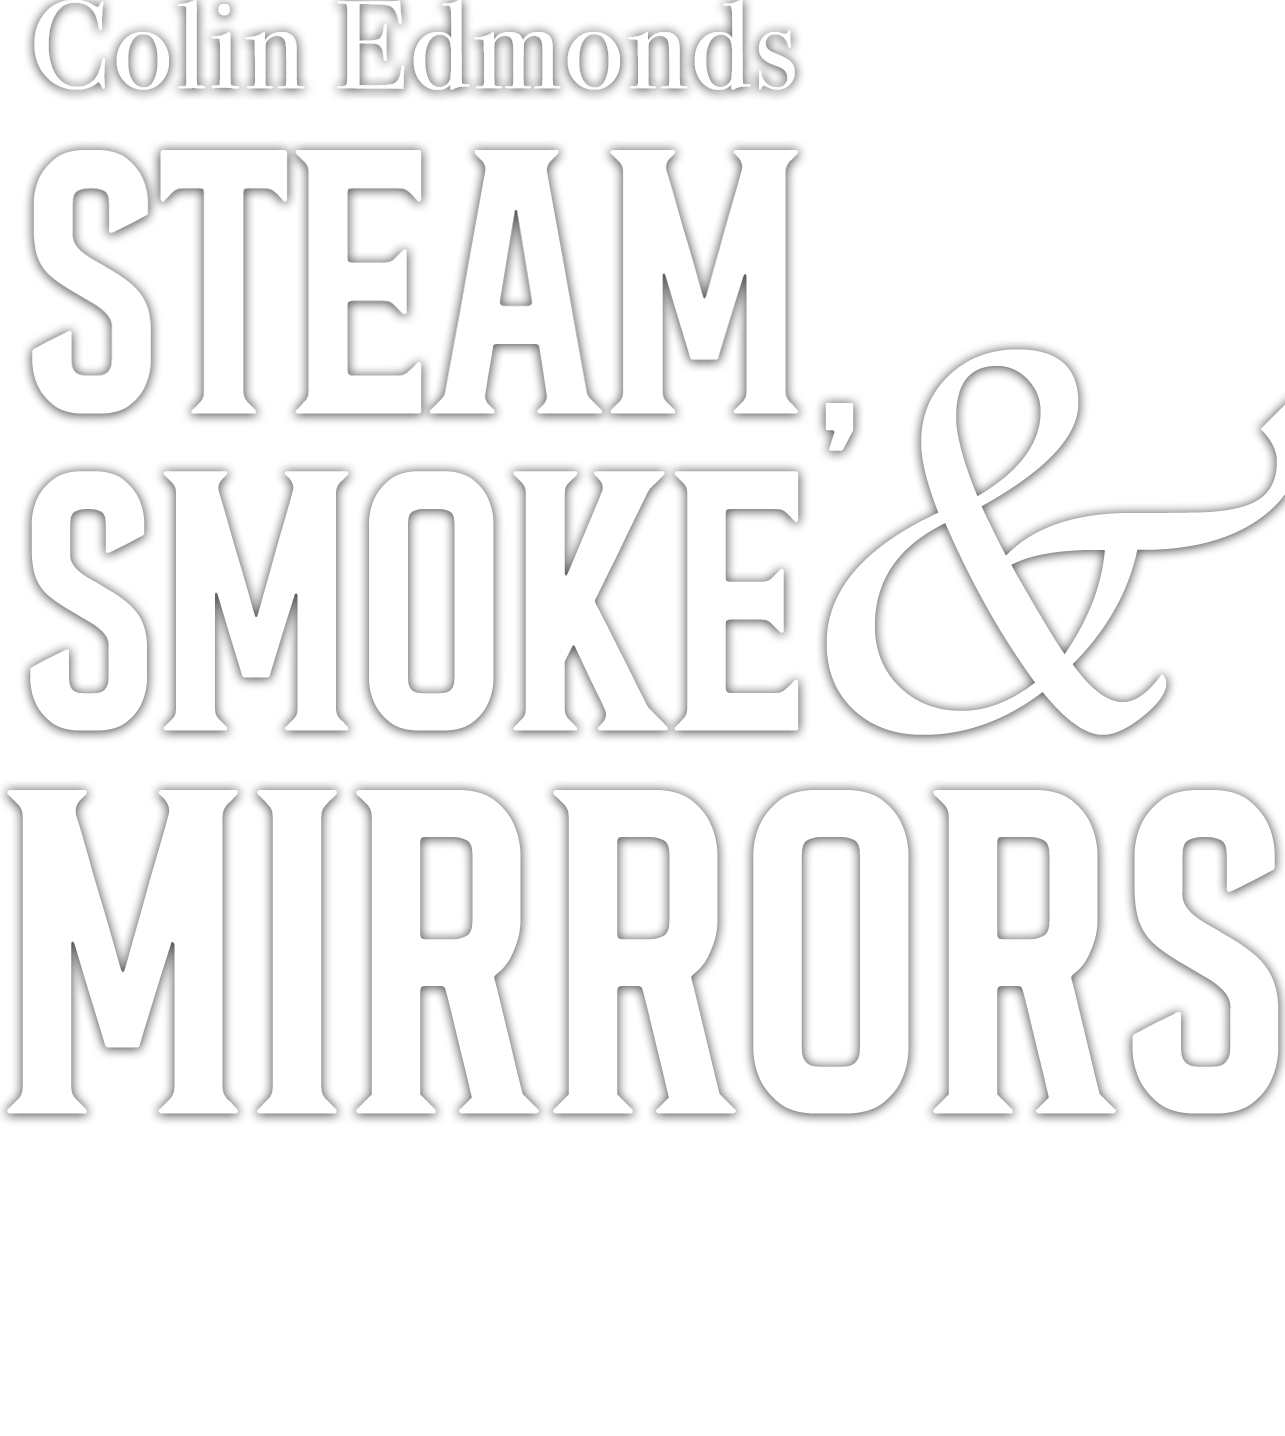 steam smoke mirrors logo2